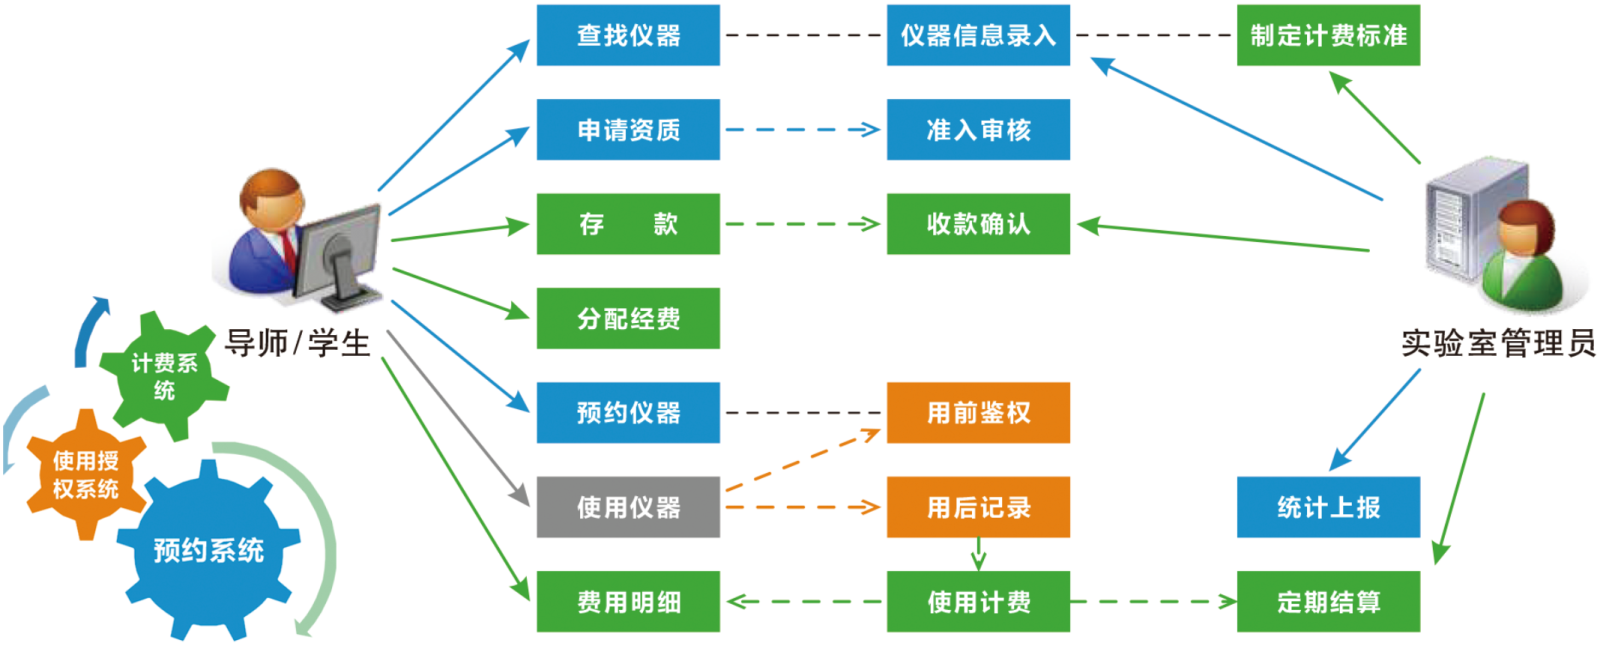 共享系统基本流程图.png